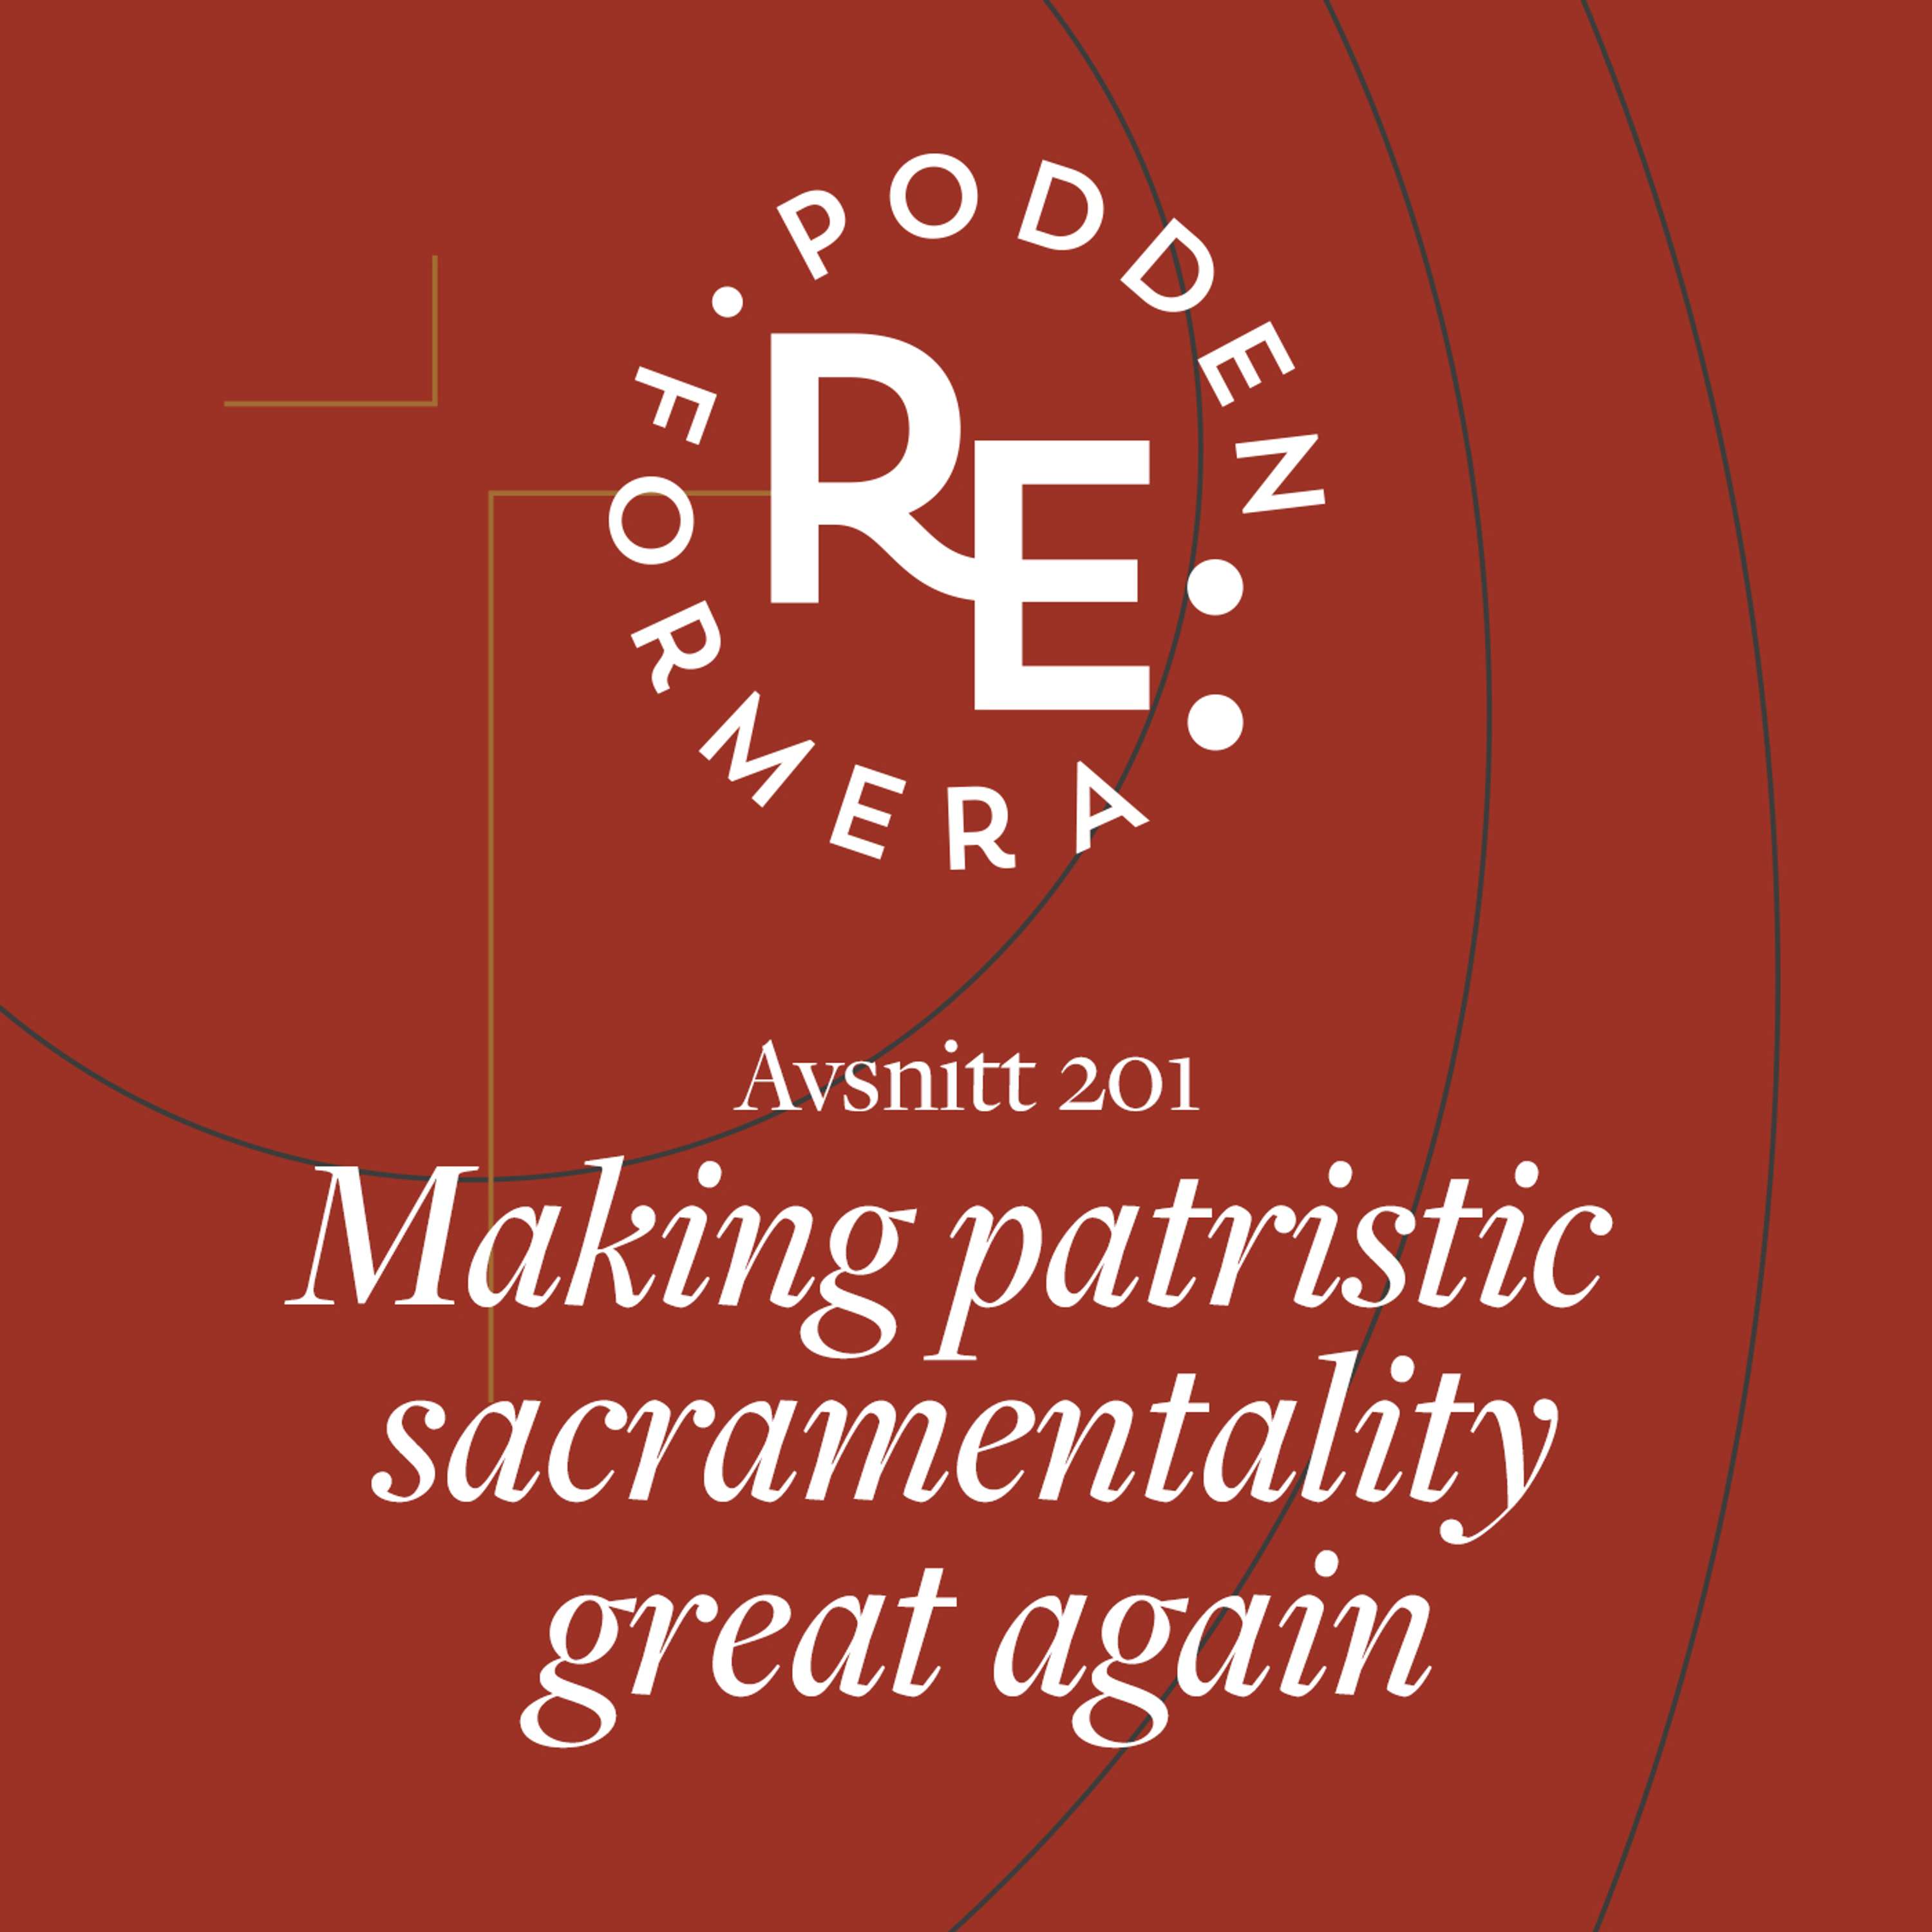 Avsnitt 201 - Making patristic sacramentality great again